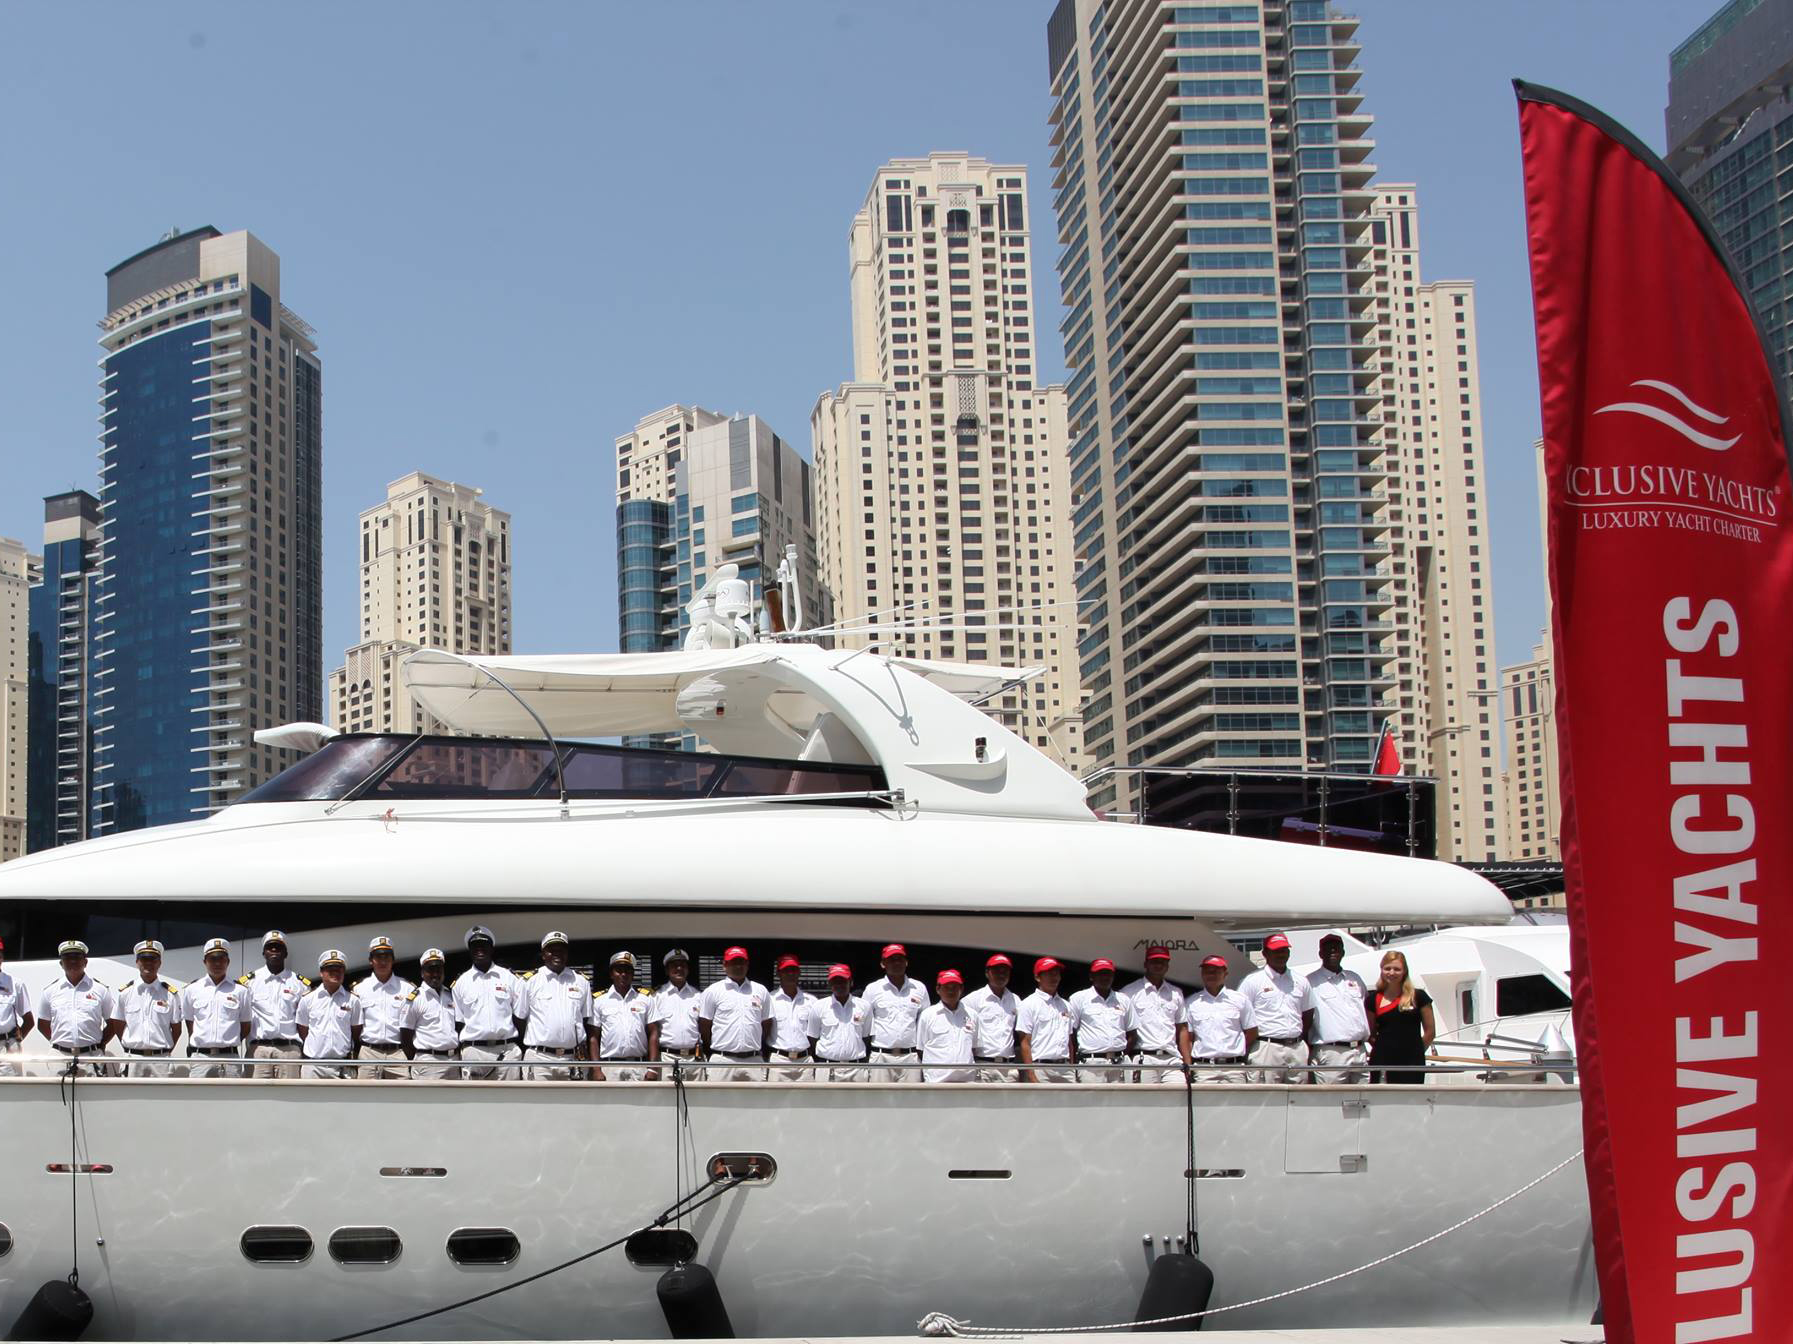 xclusive yachts dubai careers